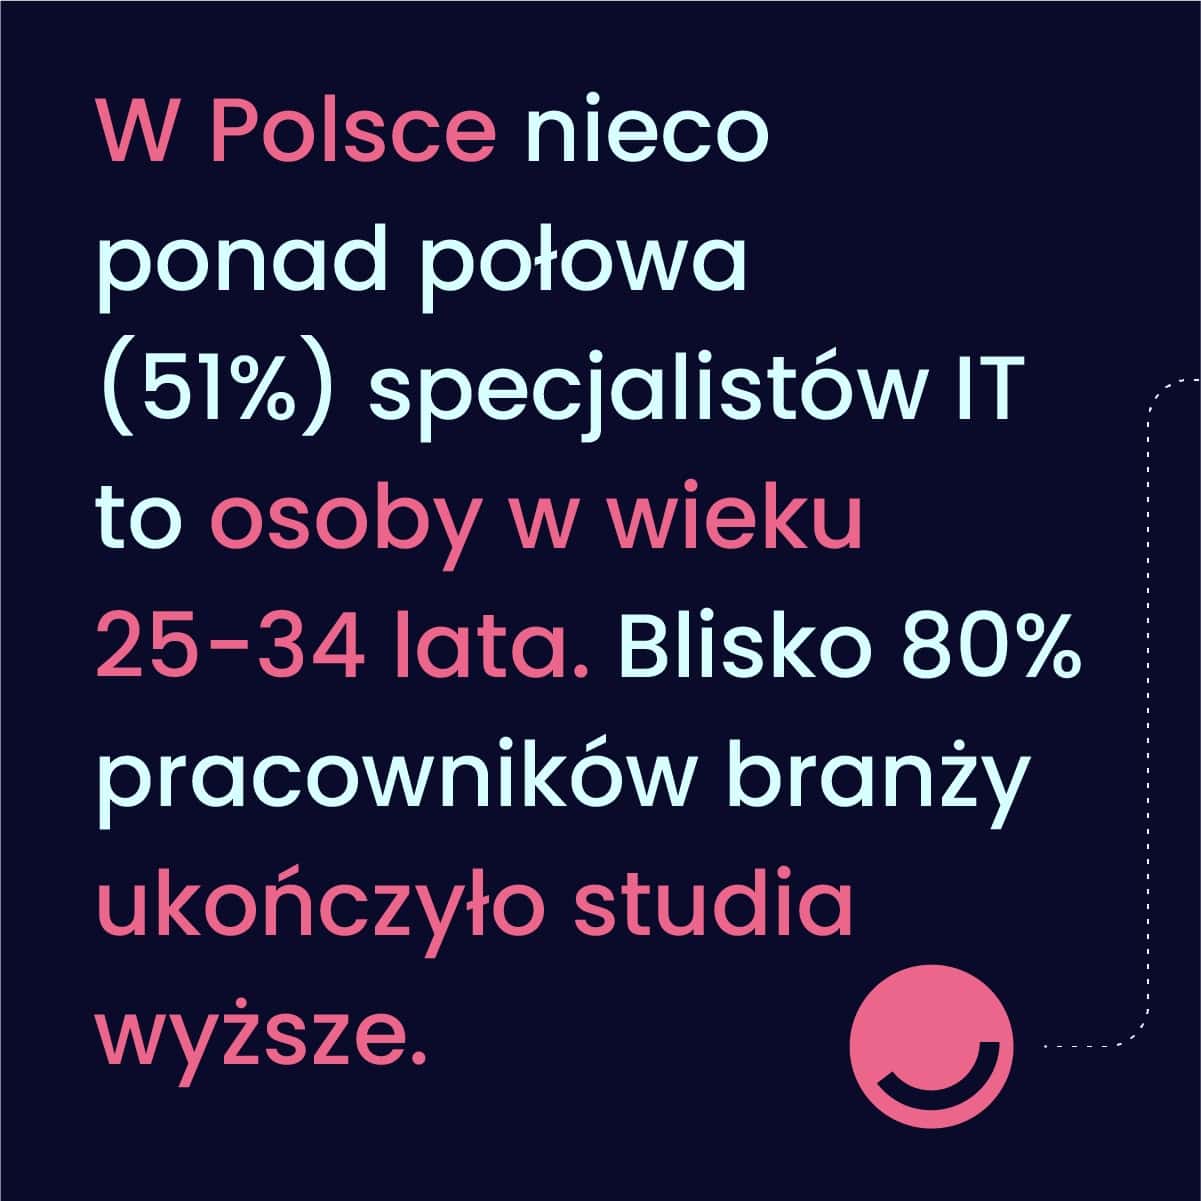 raport europa nfj polska